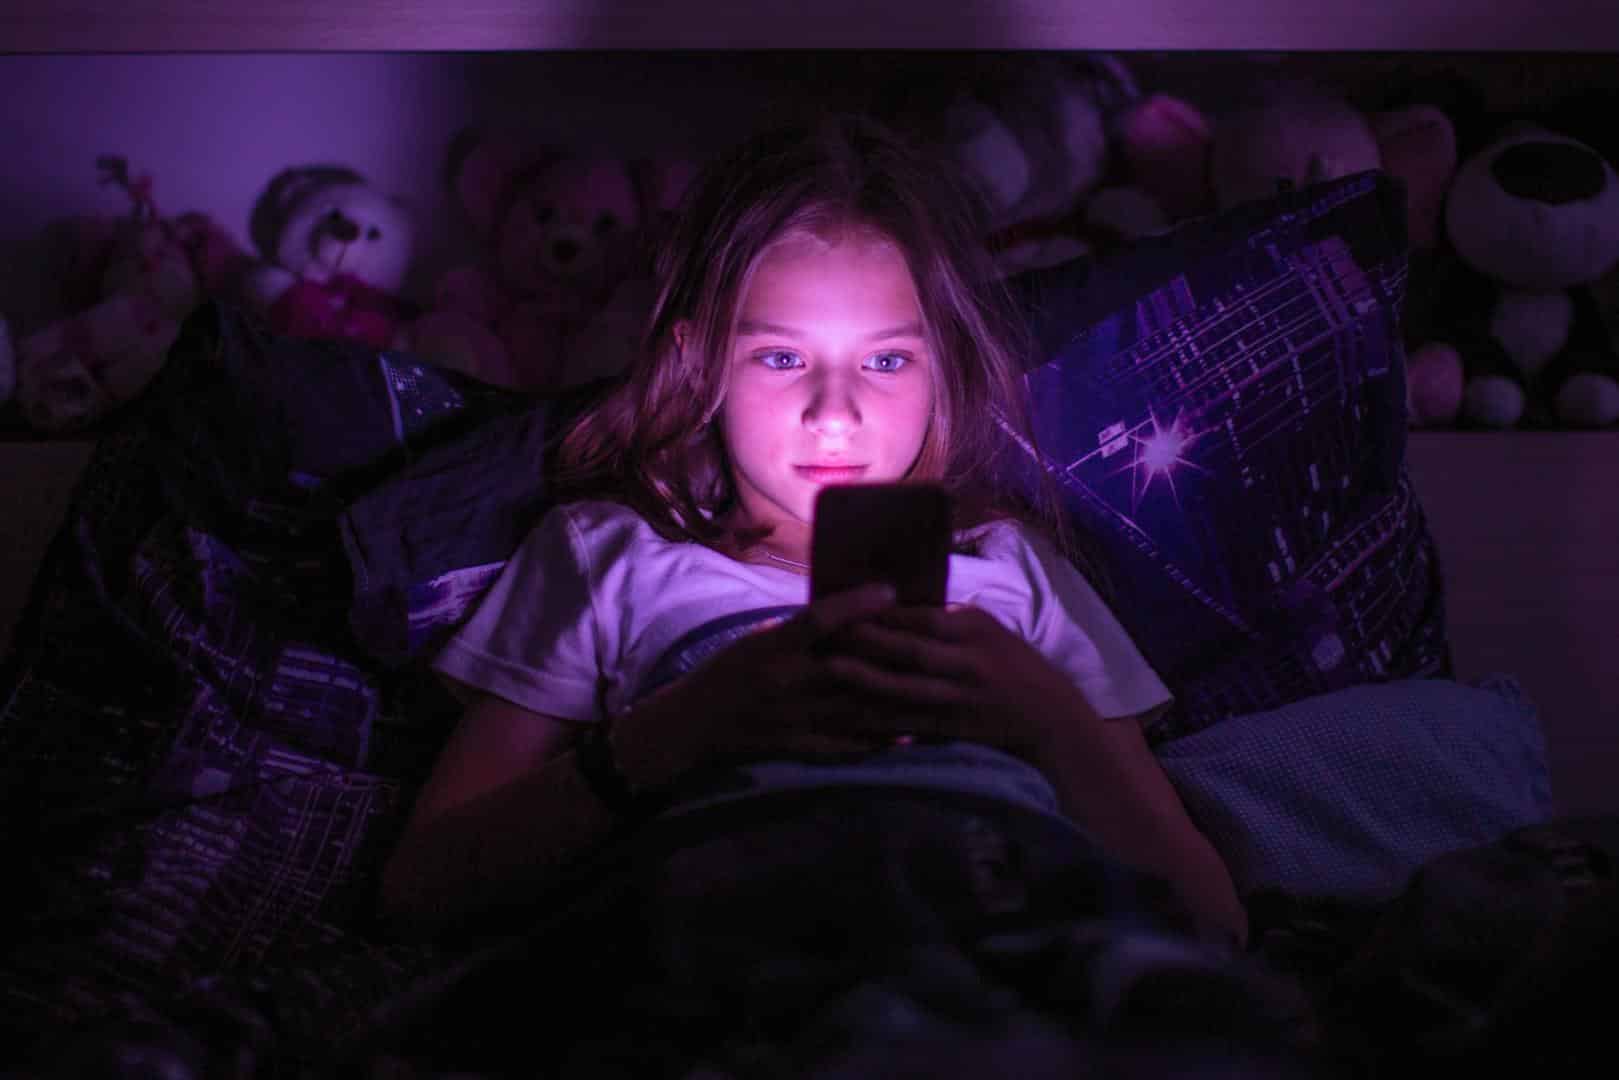 Kind nachts im Bett am Handy